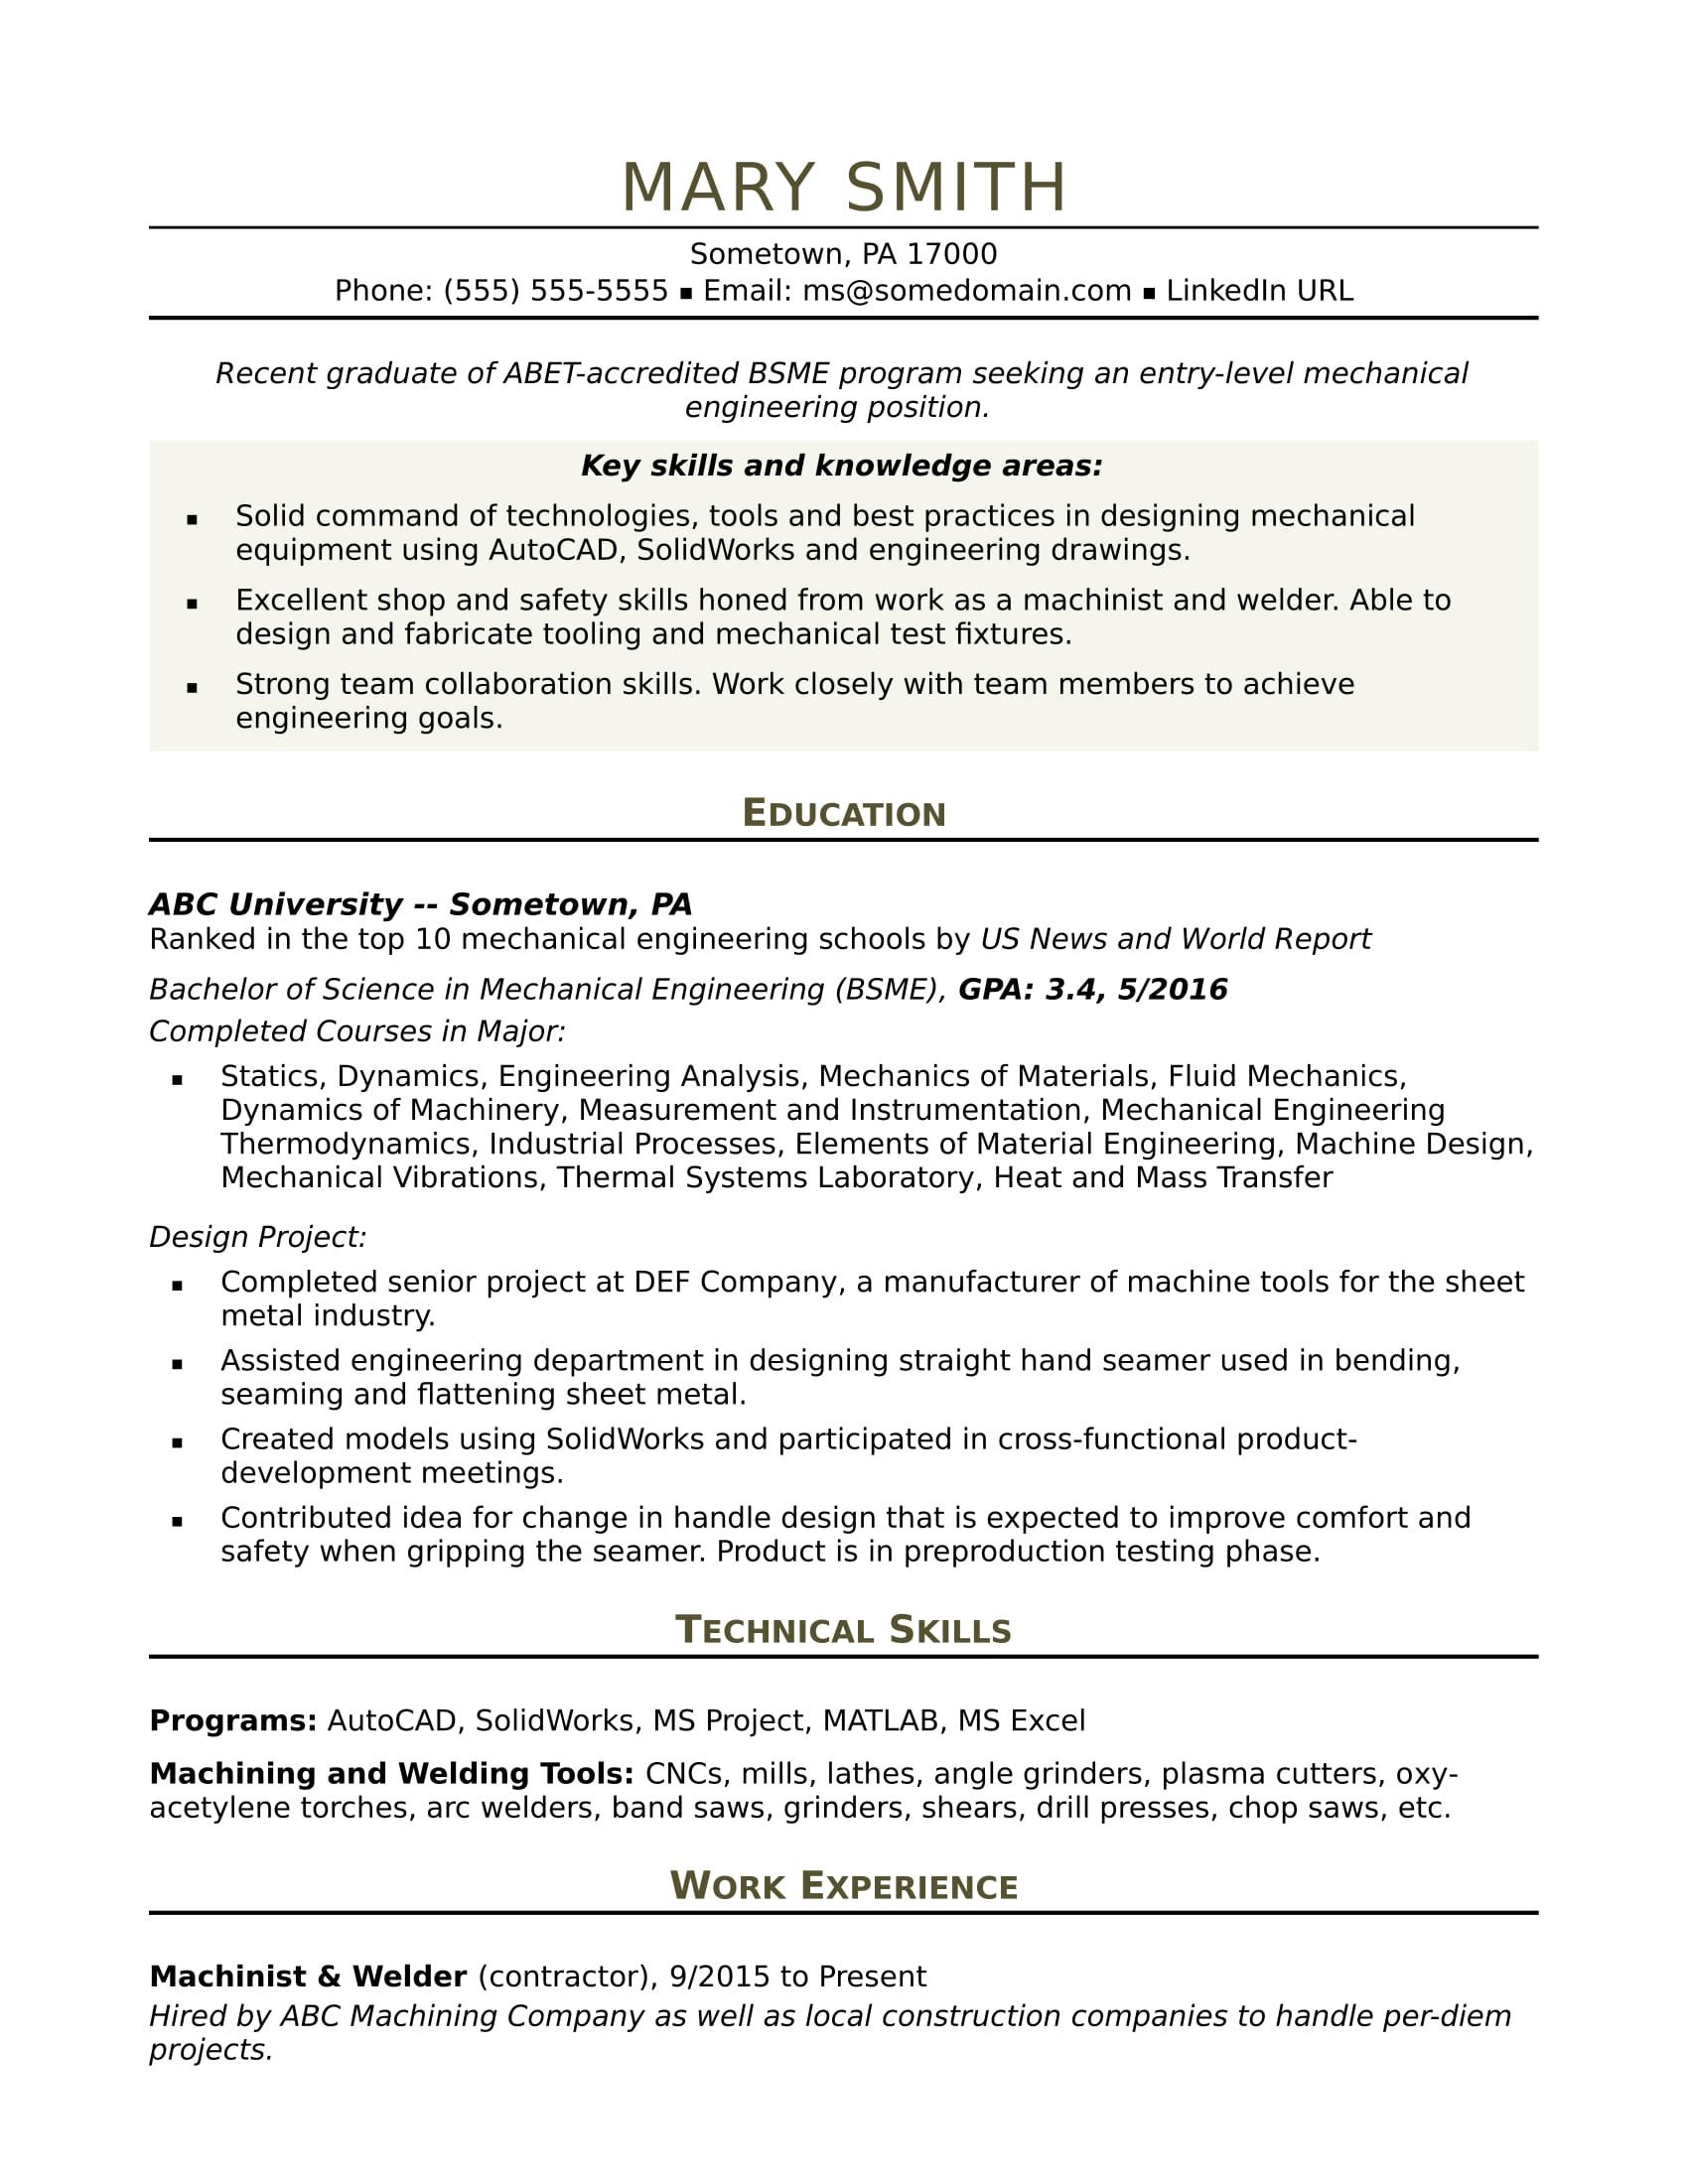 Sample Resume For An Entry Level Mechanical Engineer